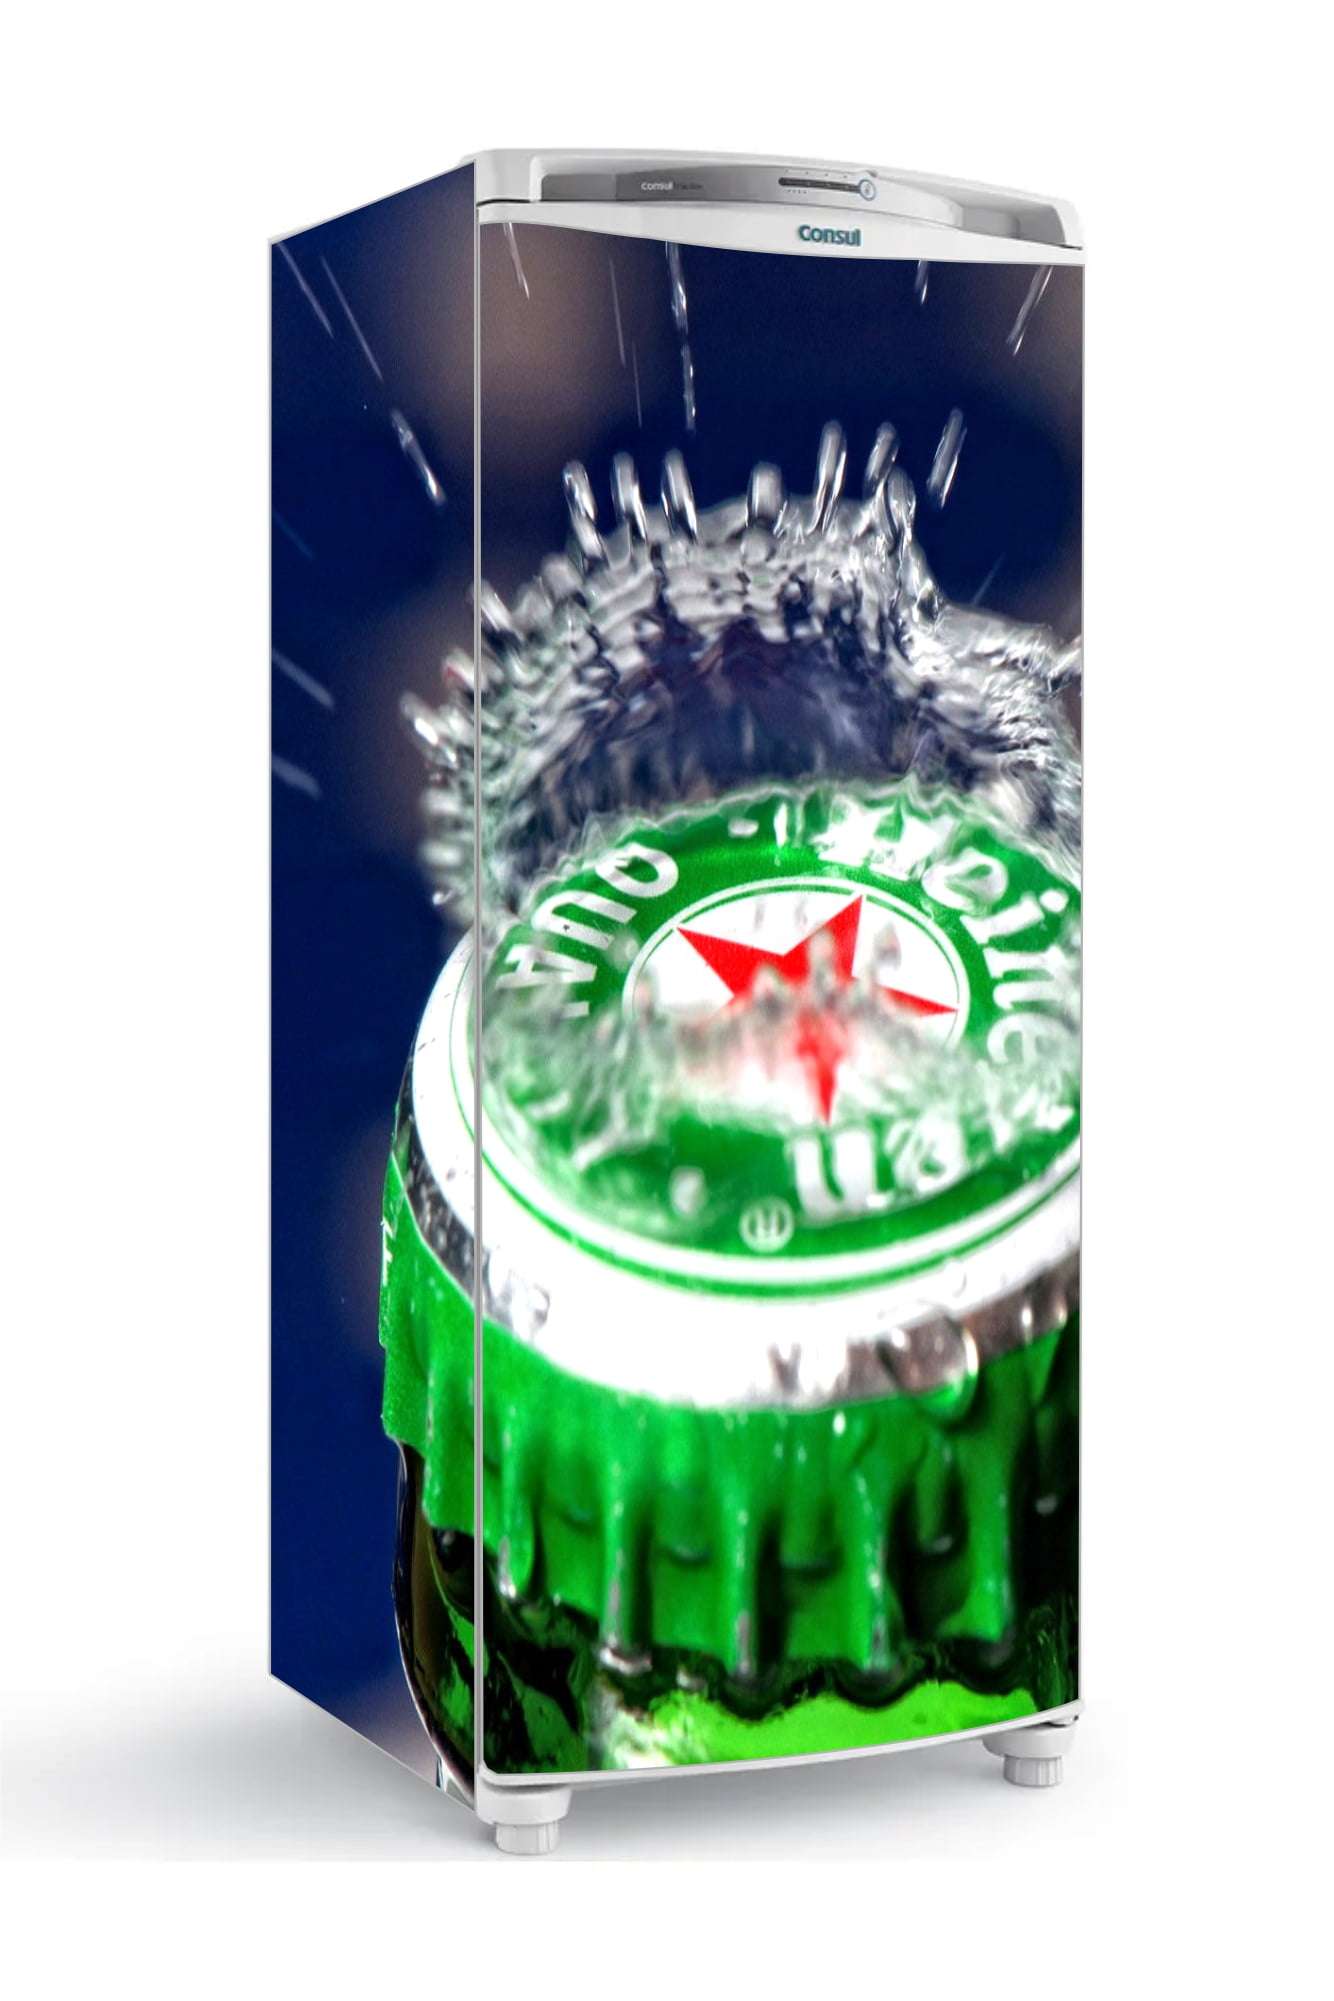 Adesivo Envelopamento Total Geladeira Heineken tampinha agua